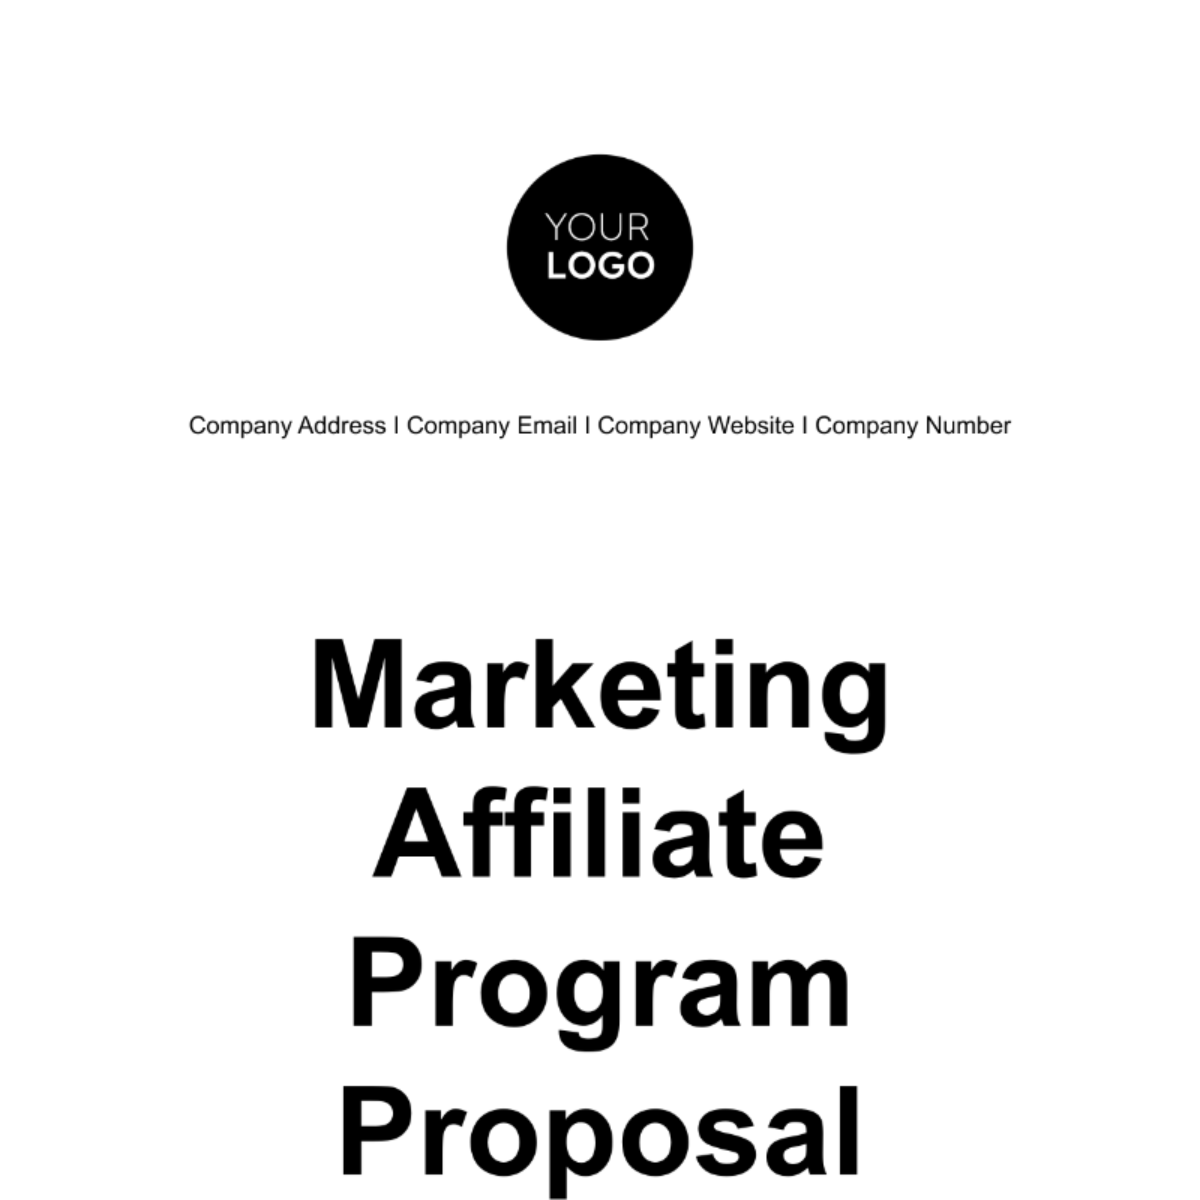 Free Marketing Affiliate Program Proposal Template